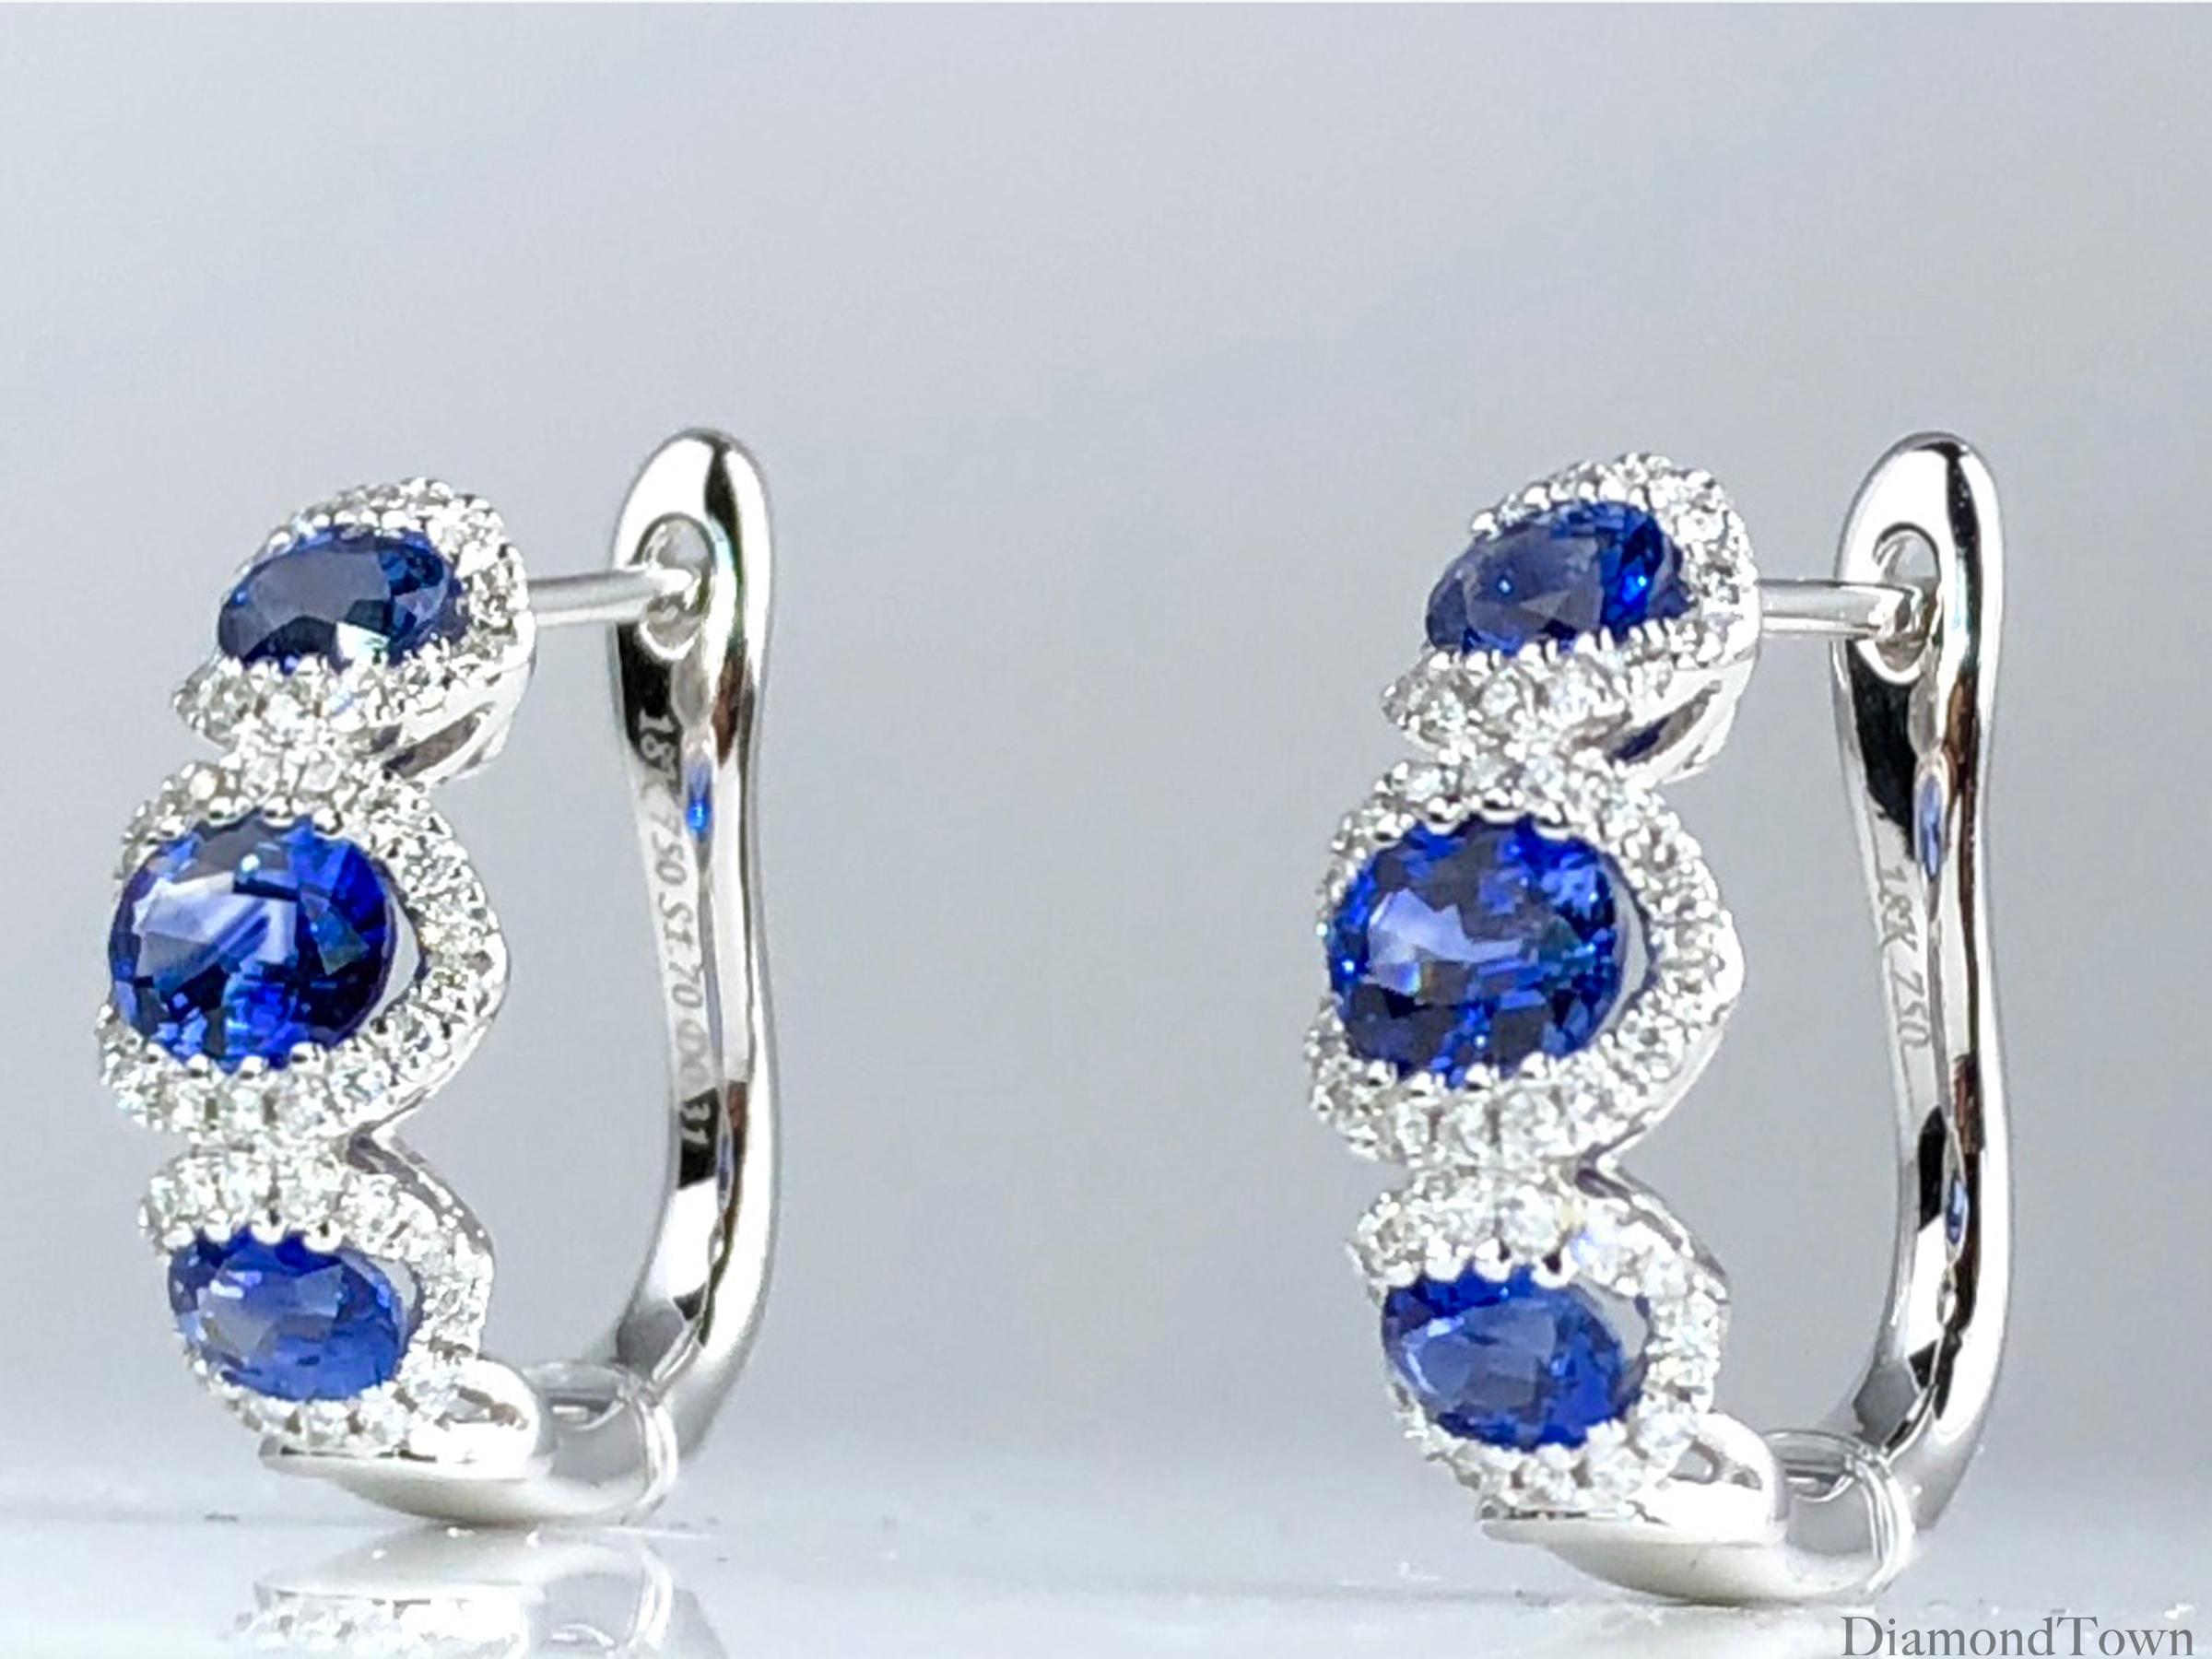 Oval Cut DiamondTown 1.70 Carat Vivid Blue Sapphire Lever-Back Stud Earrings